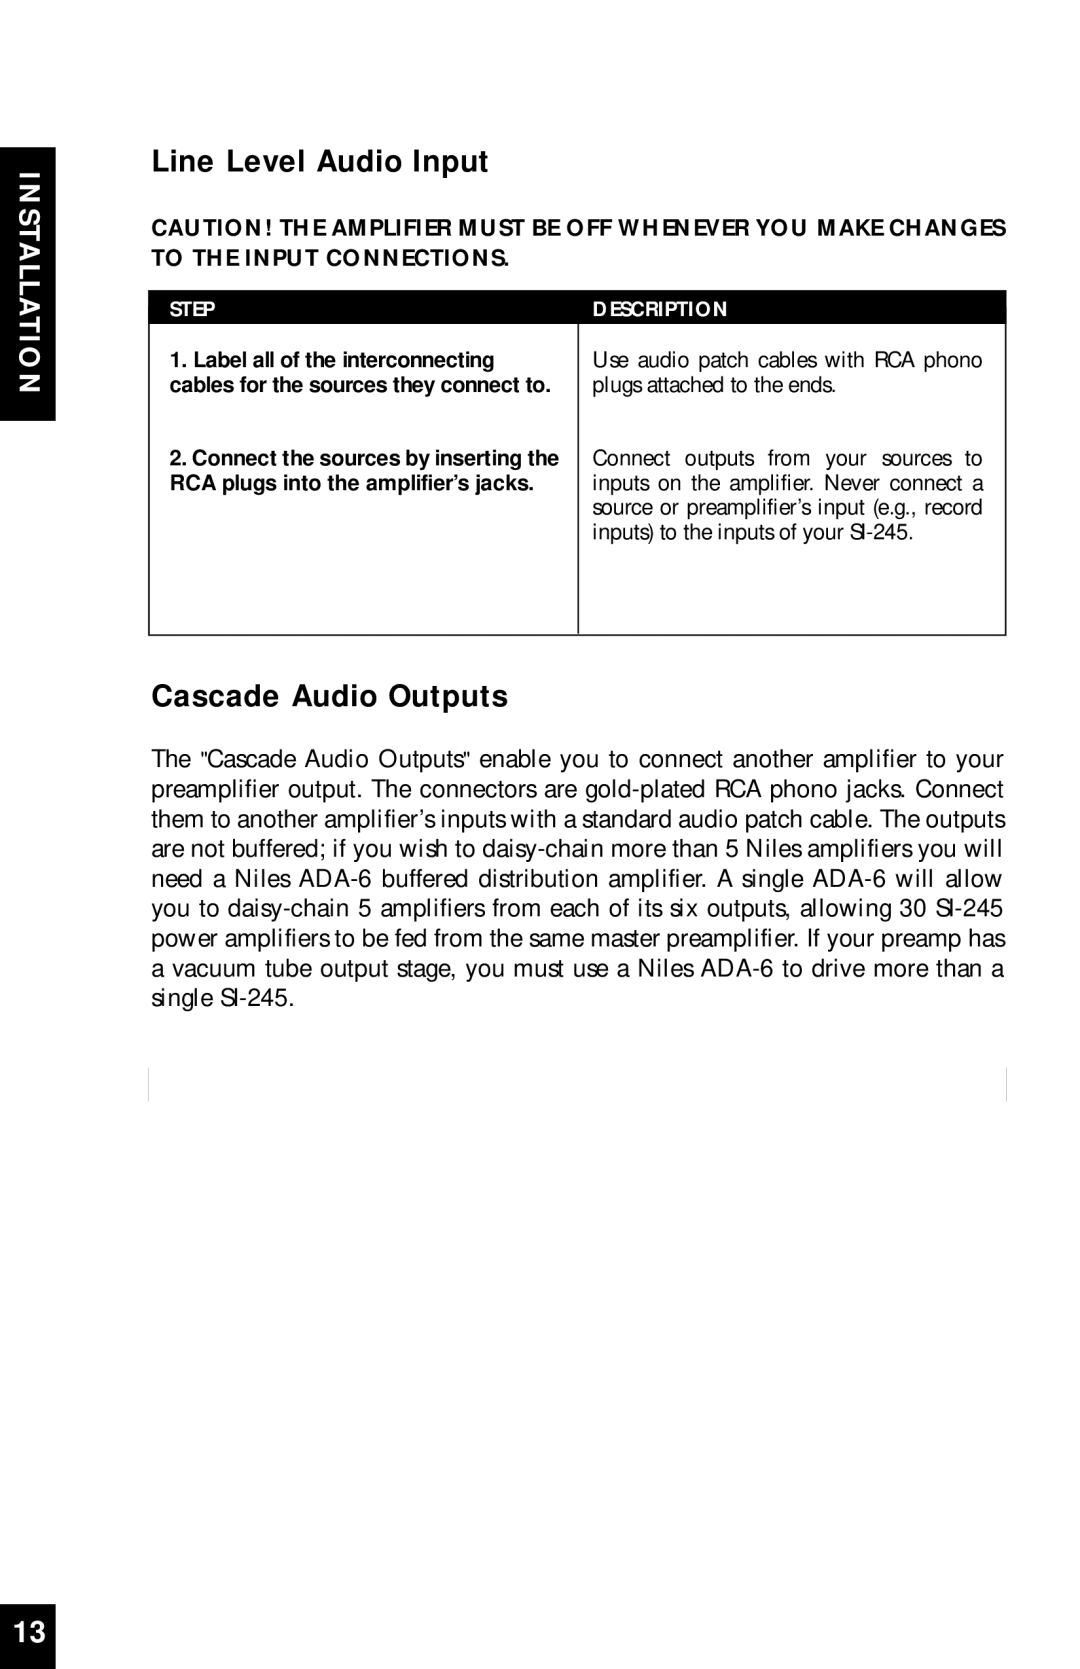 Niles Audio SI-245 manual Line Level Audio Input, Cascade Audio Outputs 